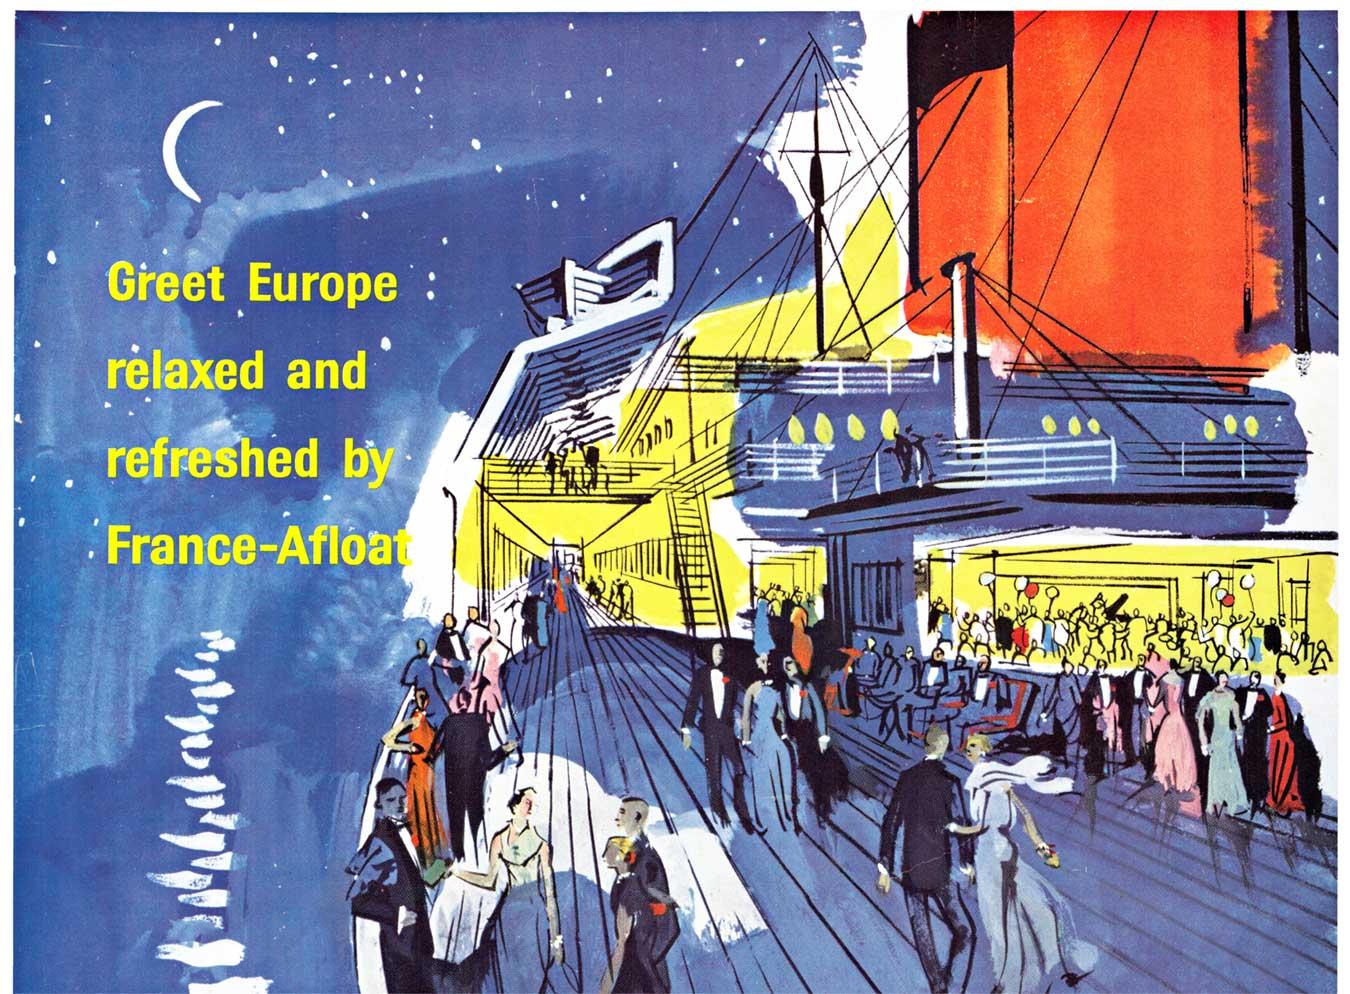 Elegant original French Line vintage cruise line travel poster - Print by Jaques Pagés